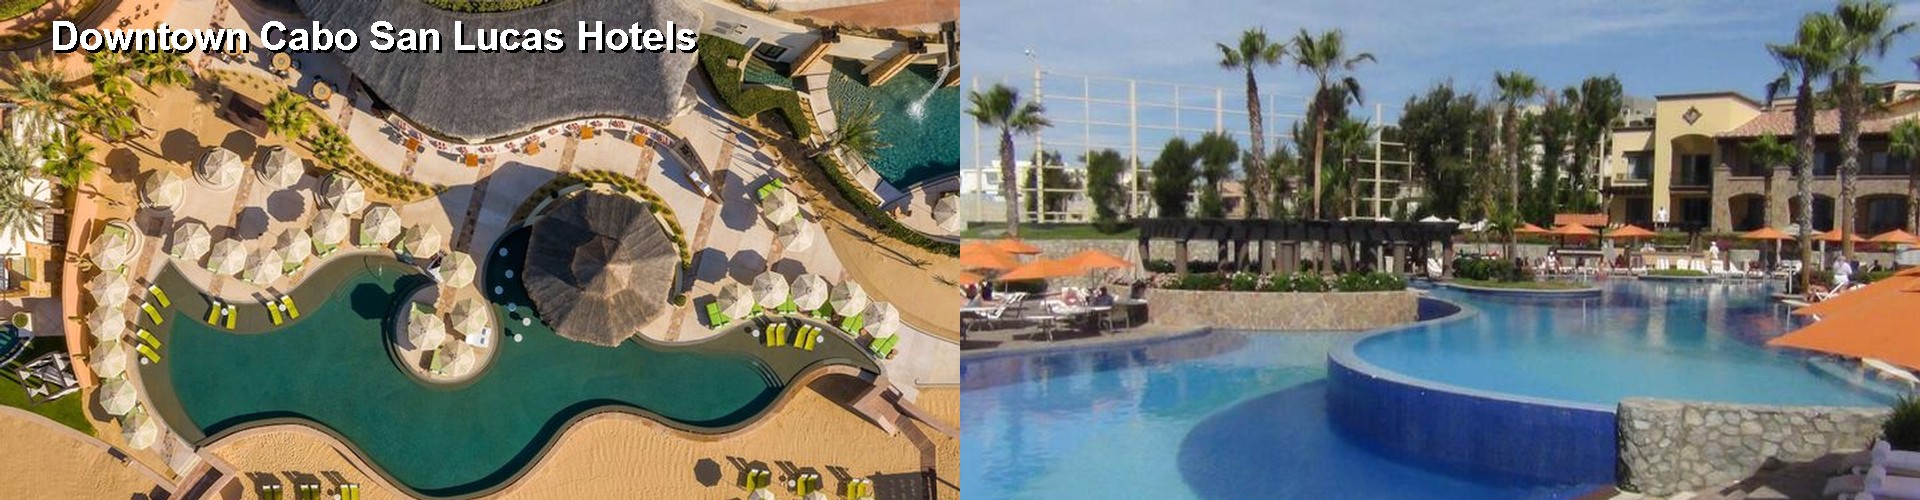 5 Best Hotels near Downtown Cabo San Lucas